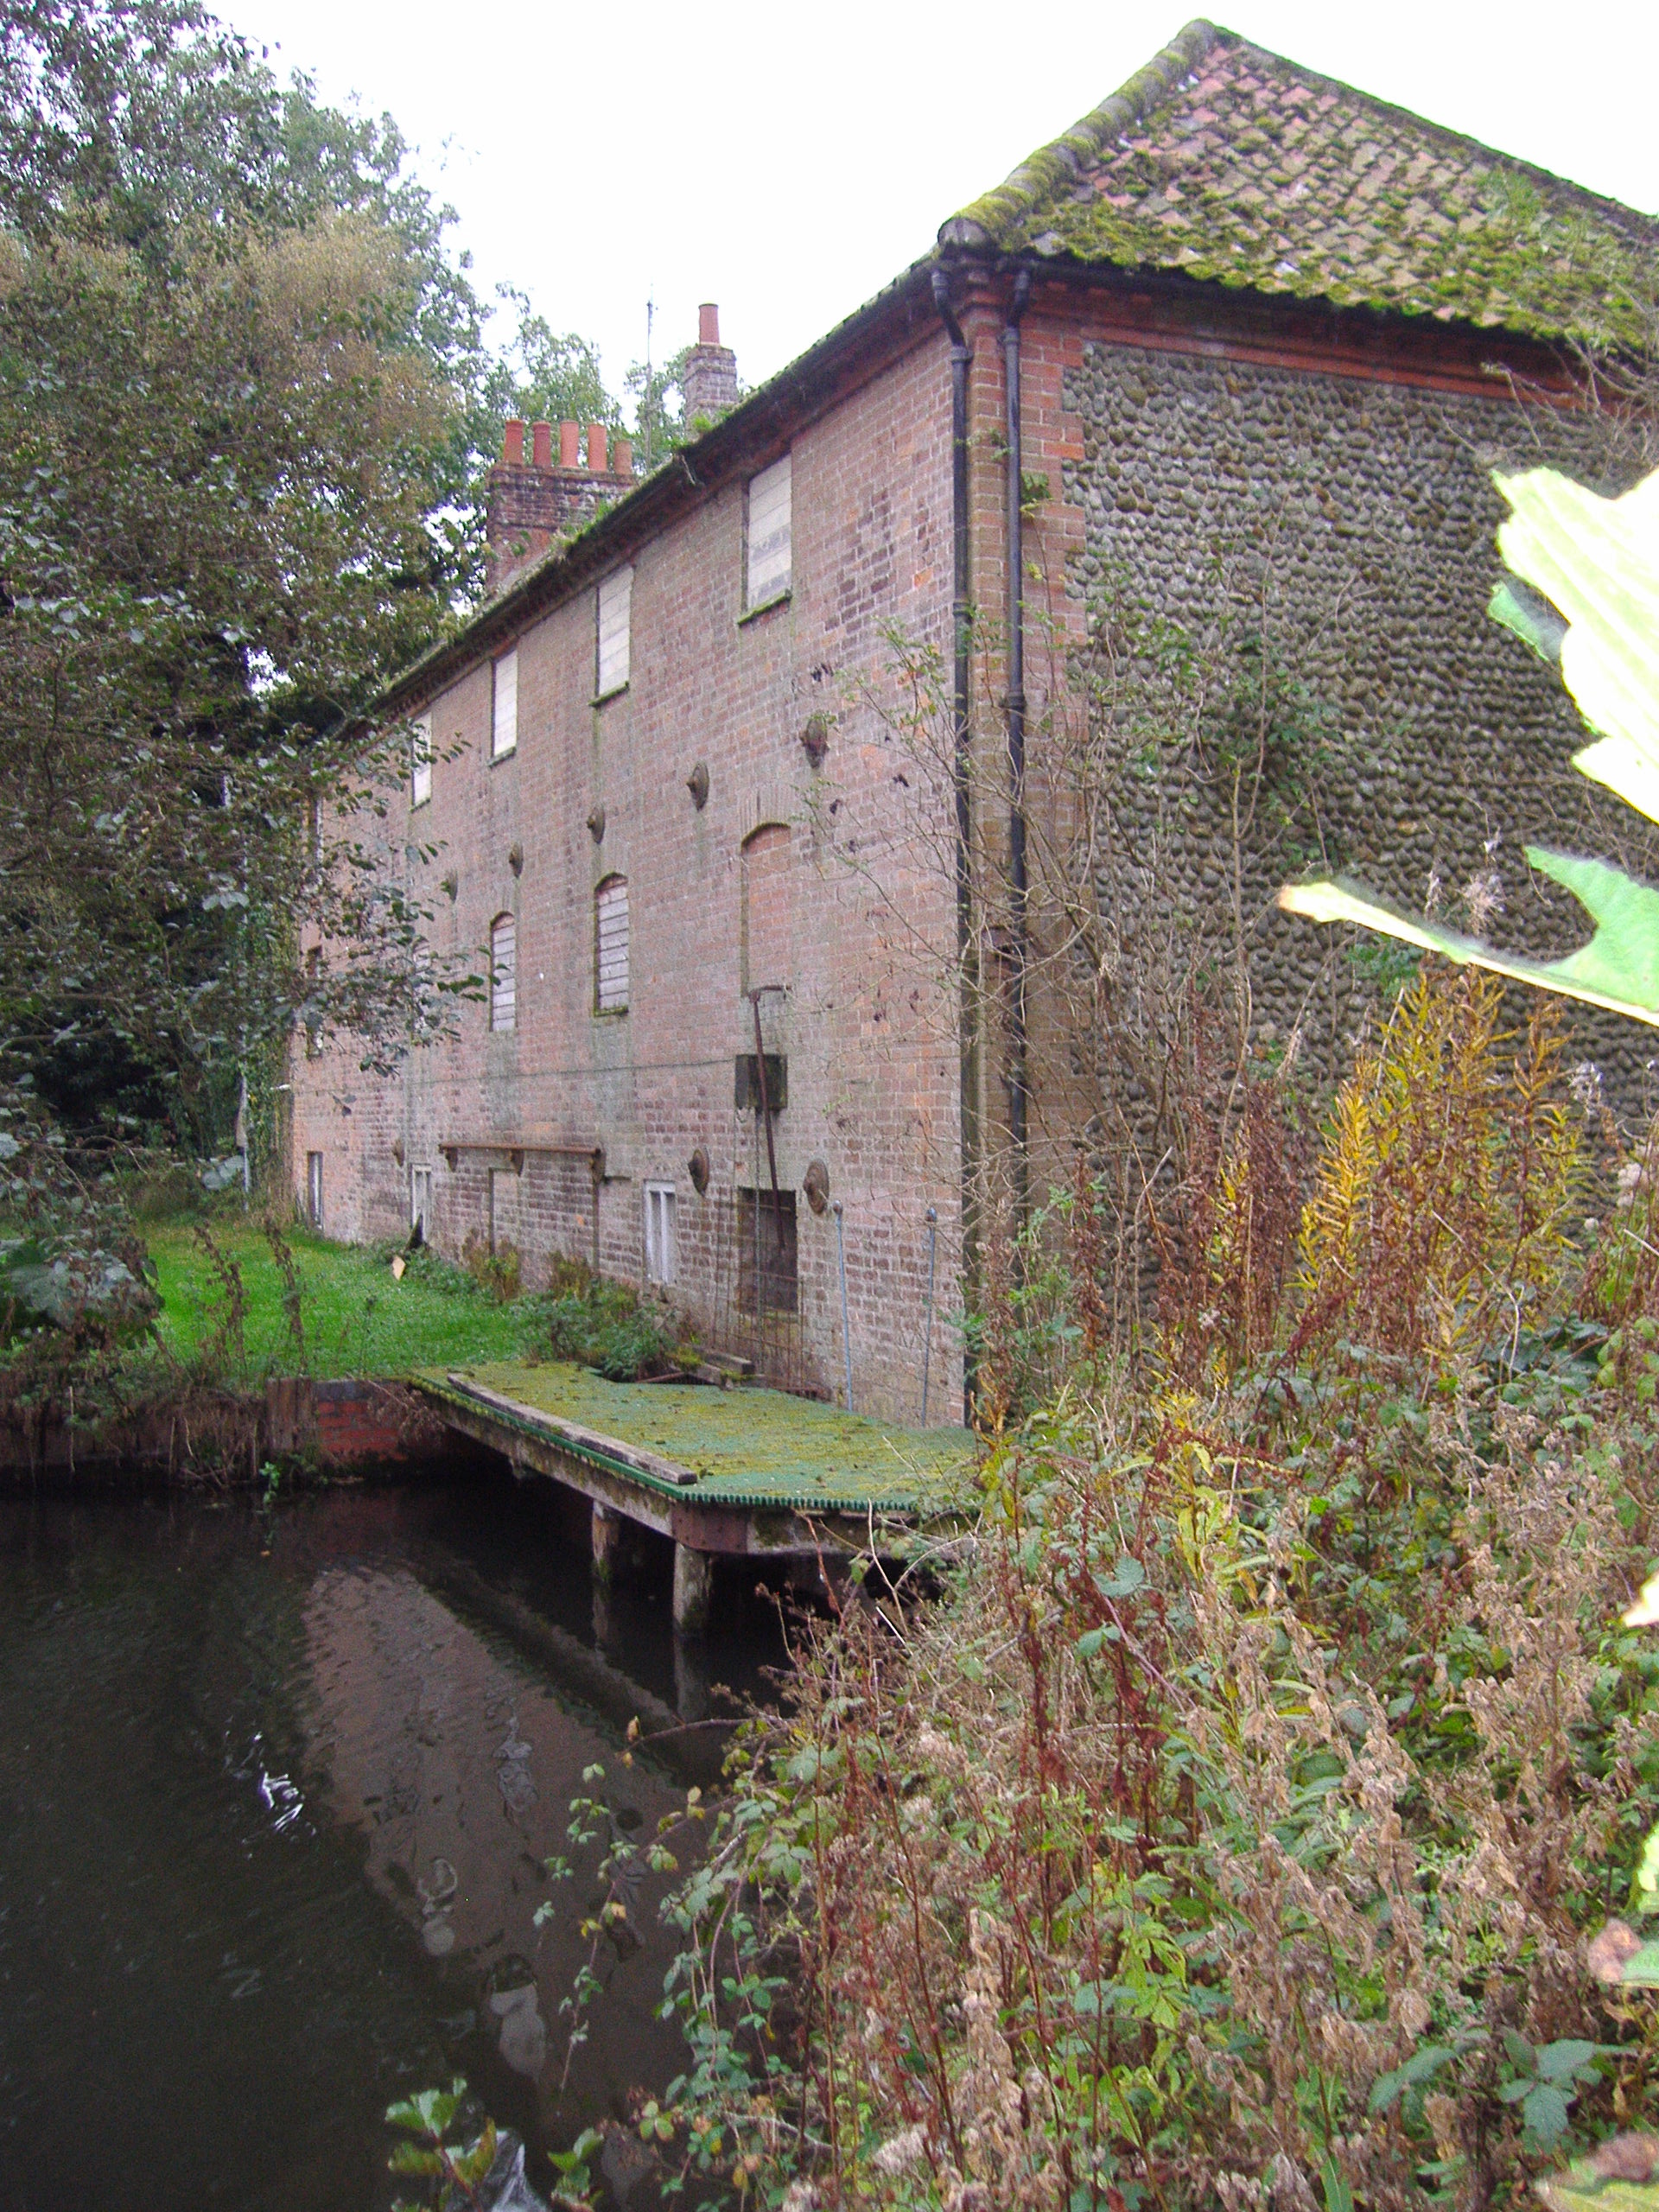 Hempstead Watermill